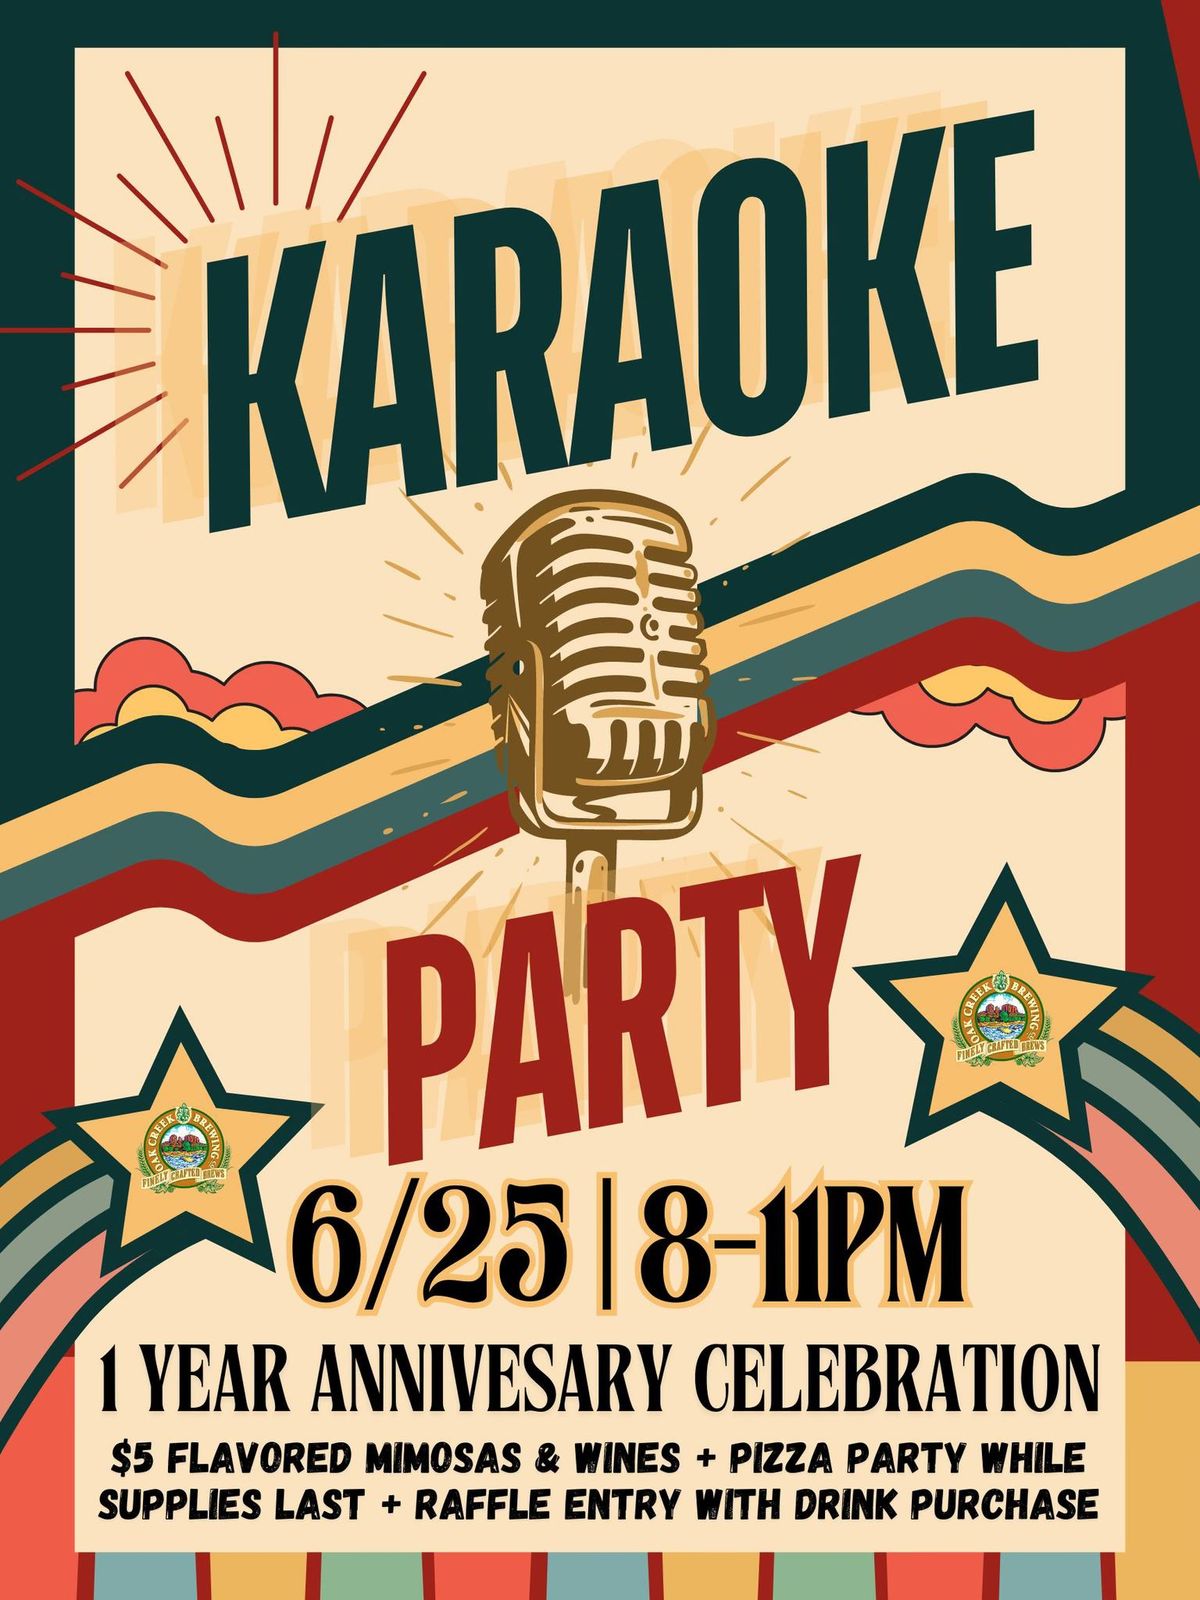 Oak Creek Brewery's 1-Year Anniversary Karaoke Night Party!